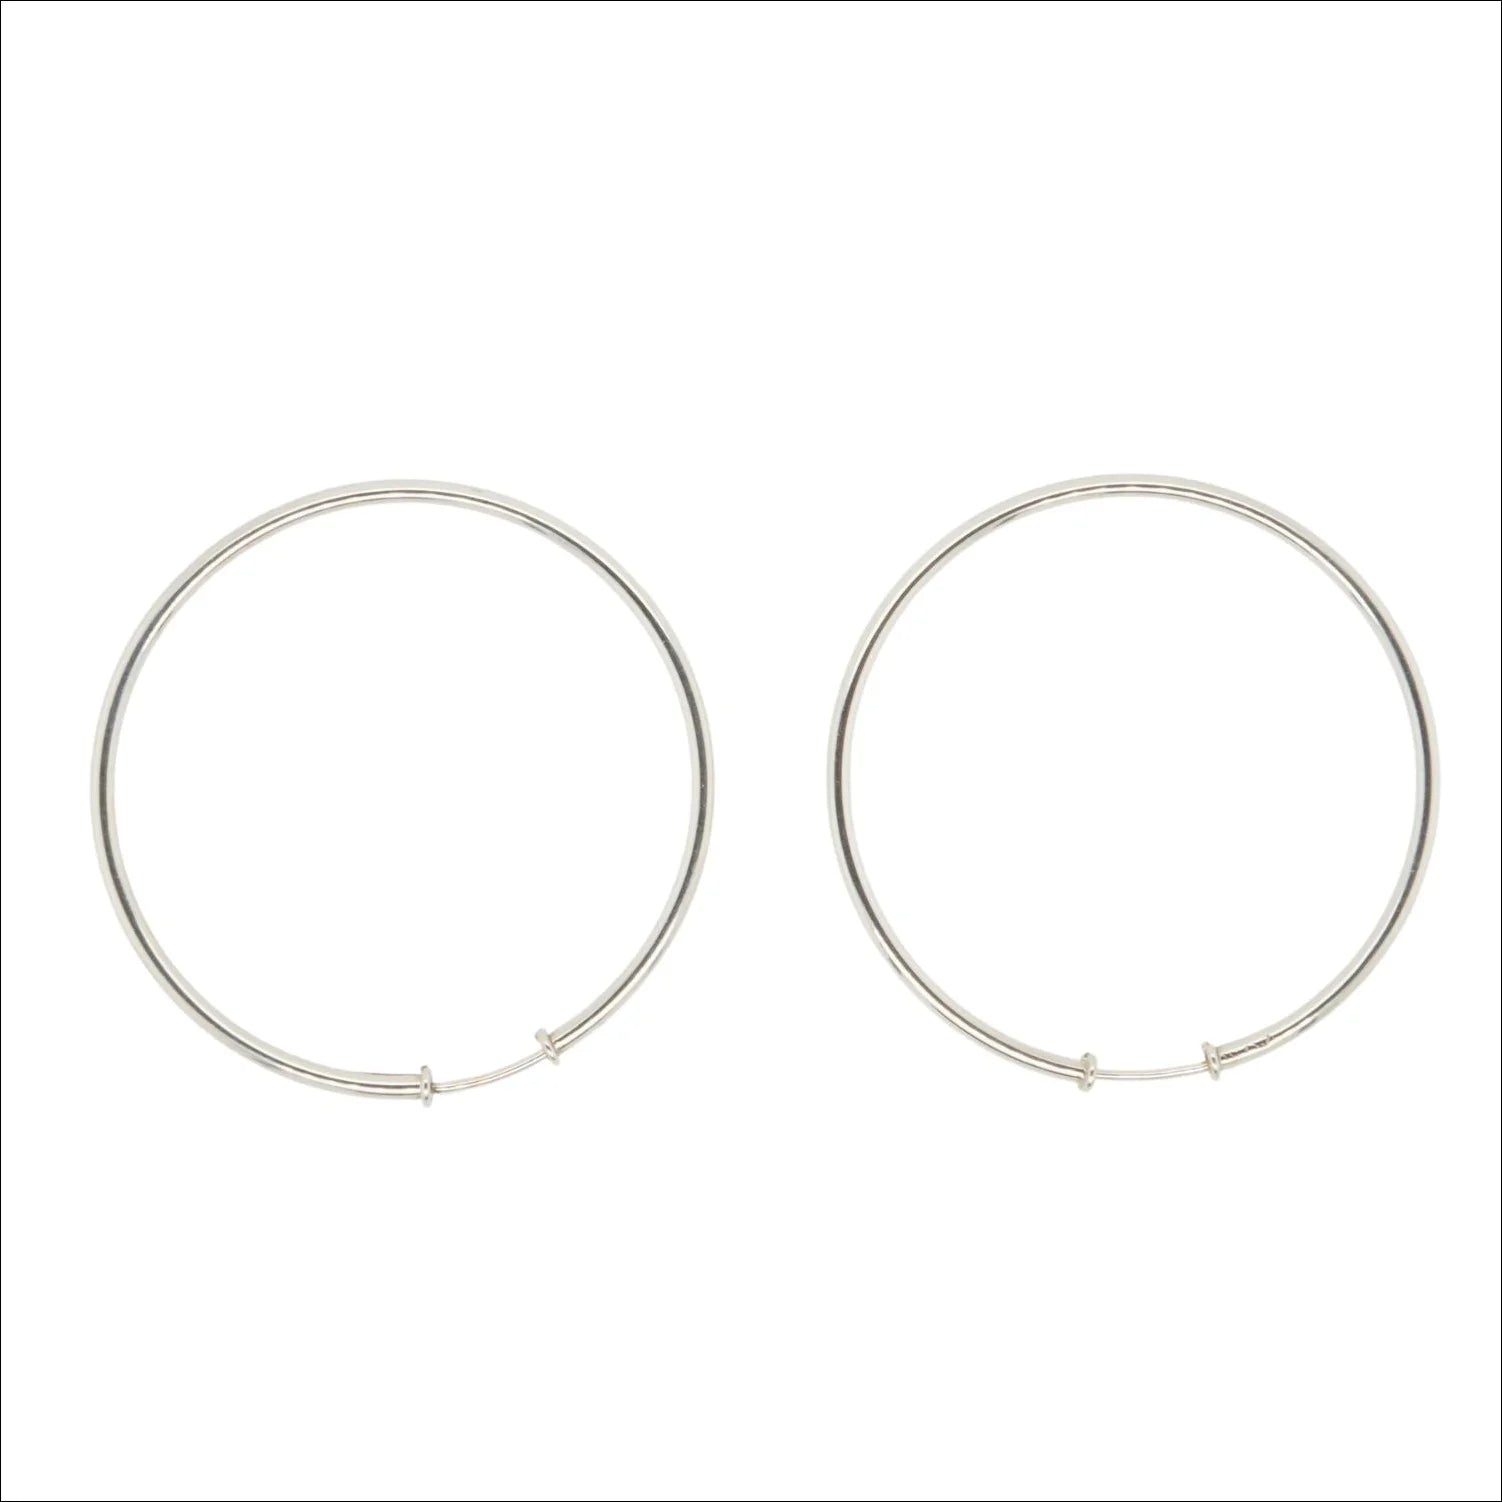 Luxury 18k White Gold Hoop Earrings | Home page